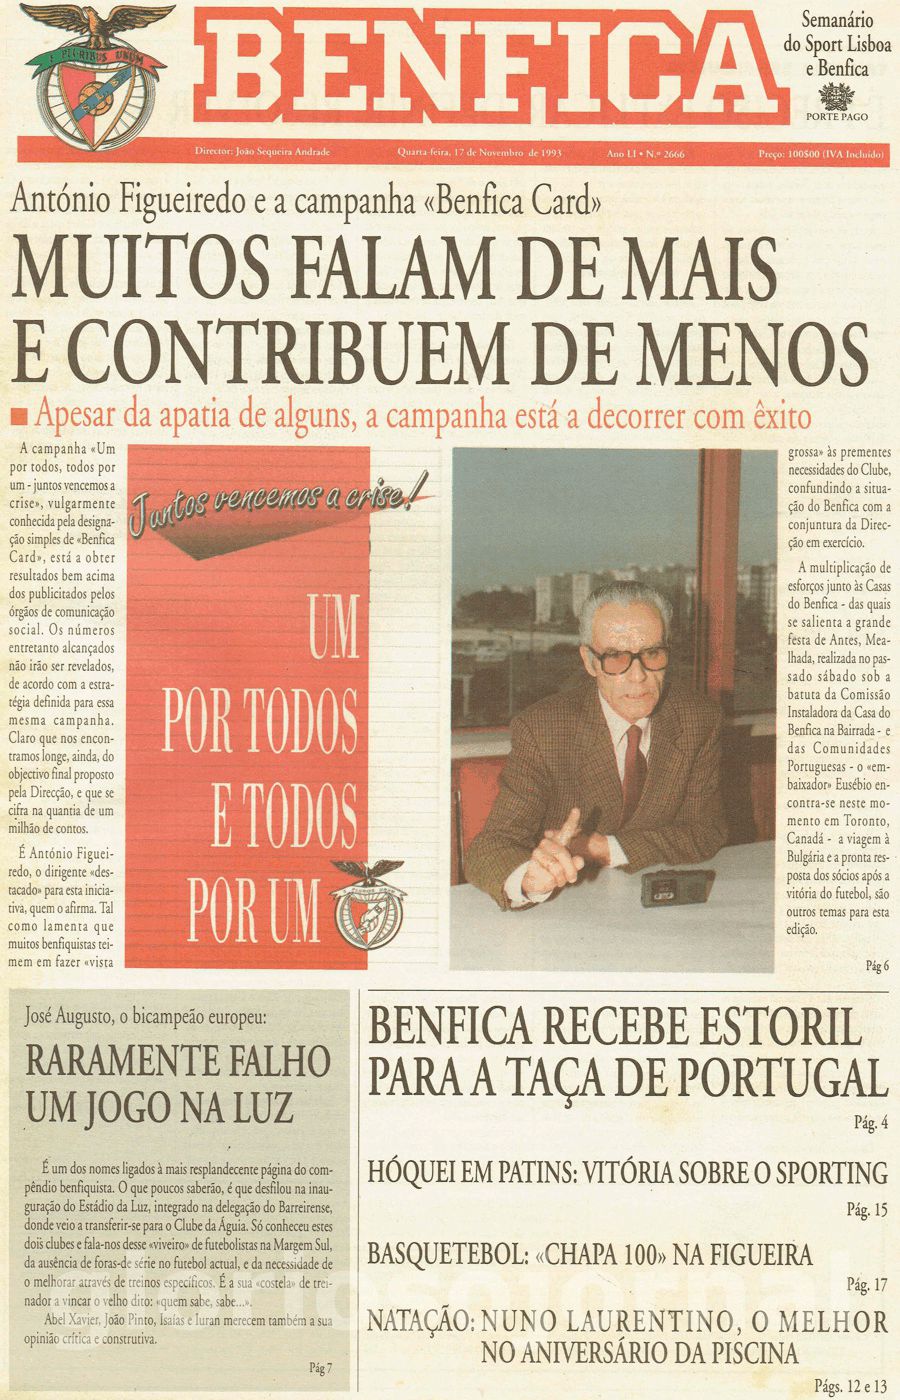 jornal o benfica 2666 1993-11-17